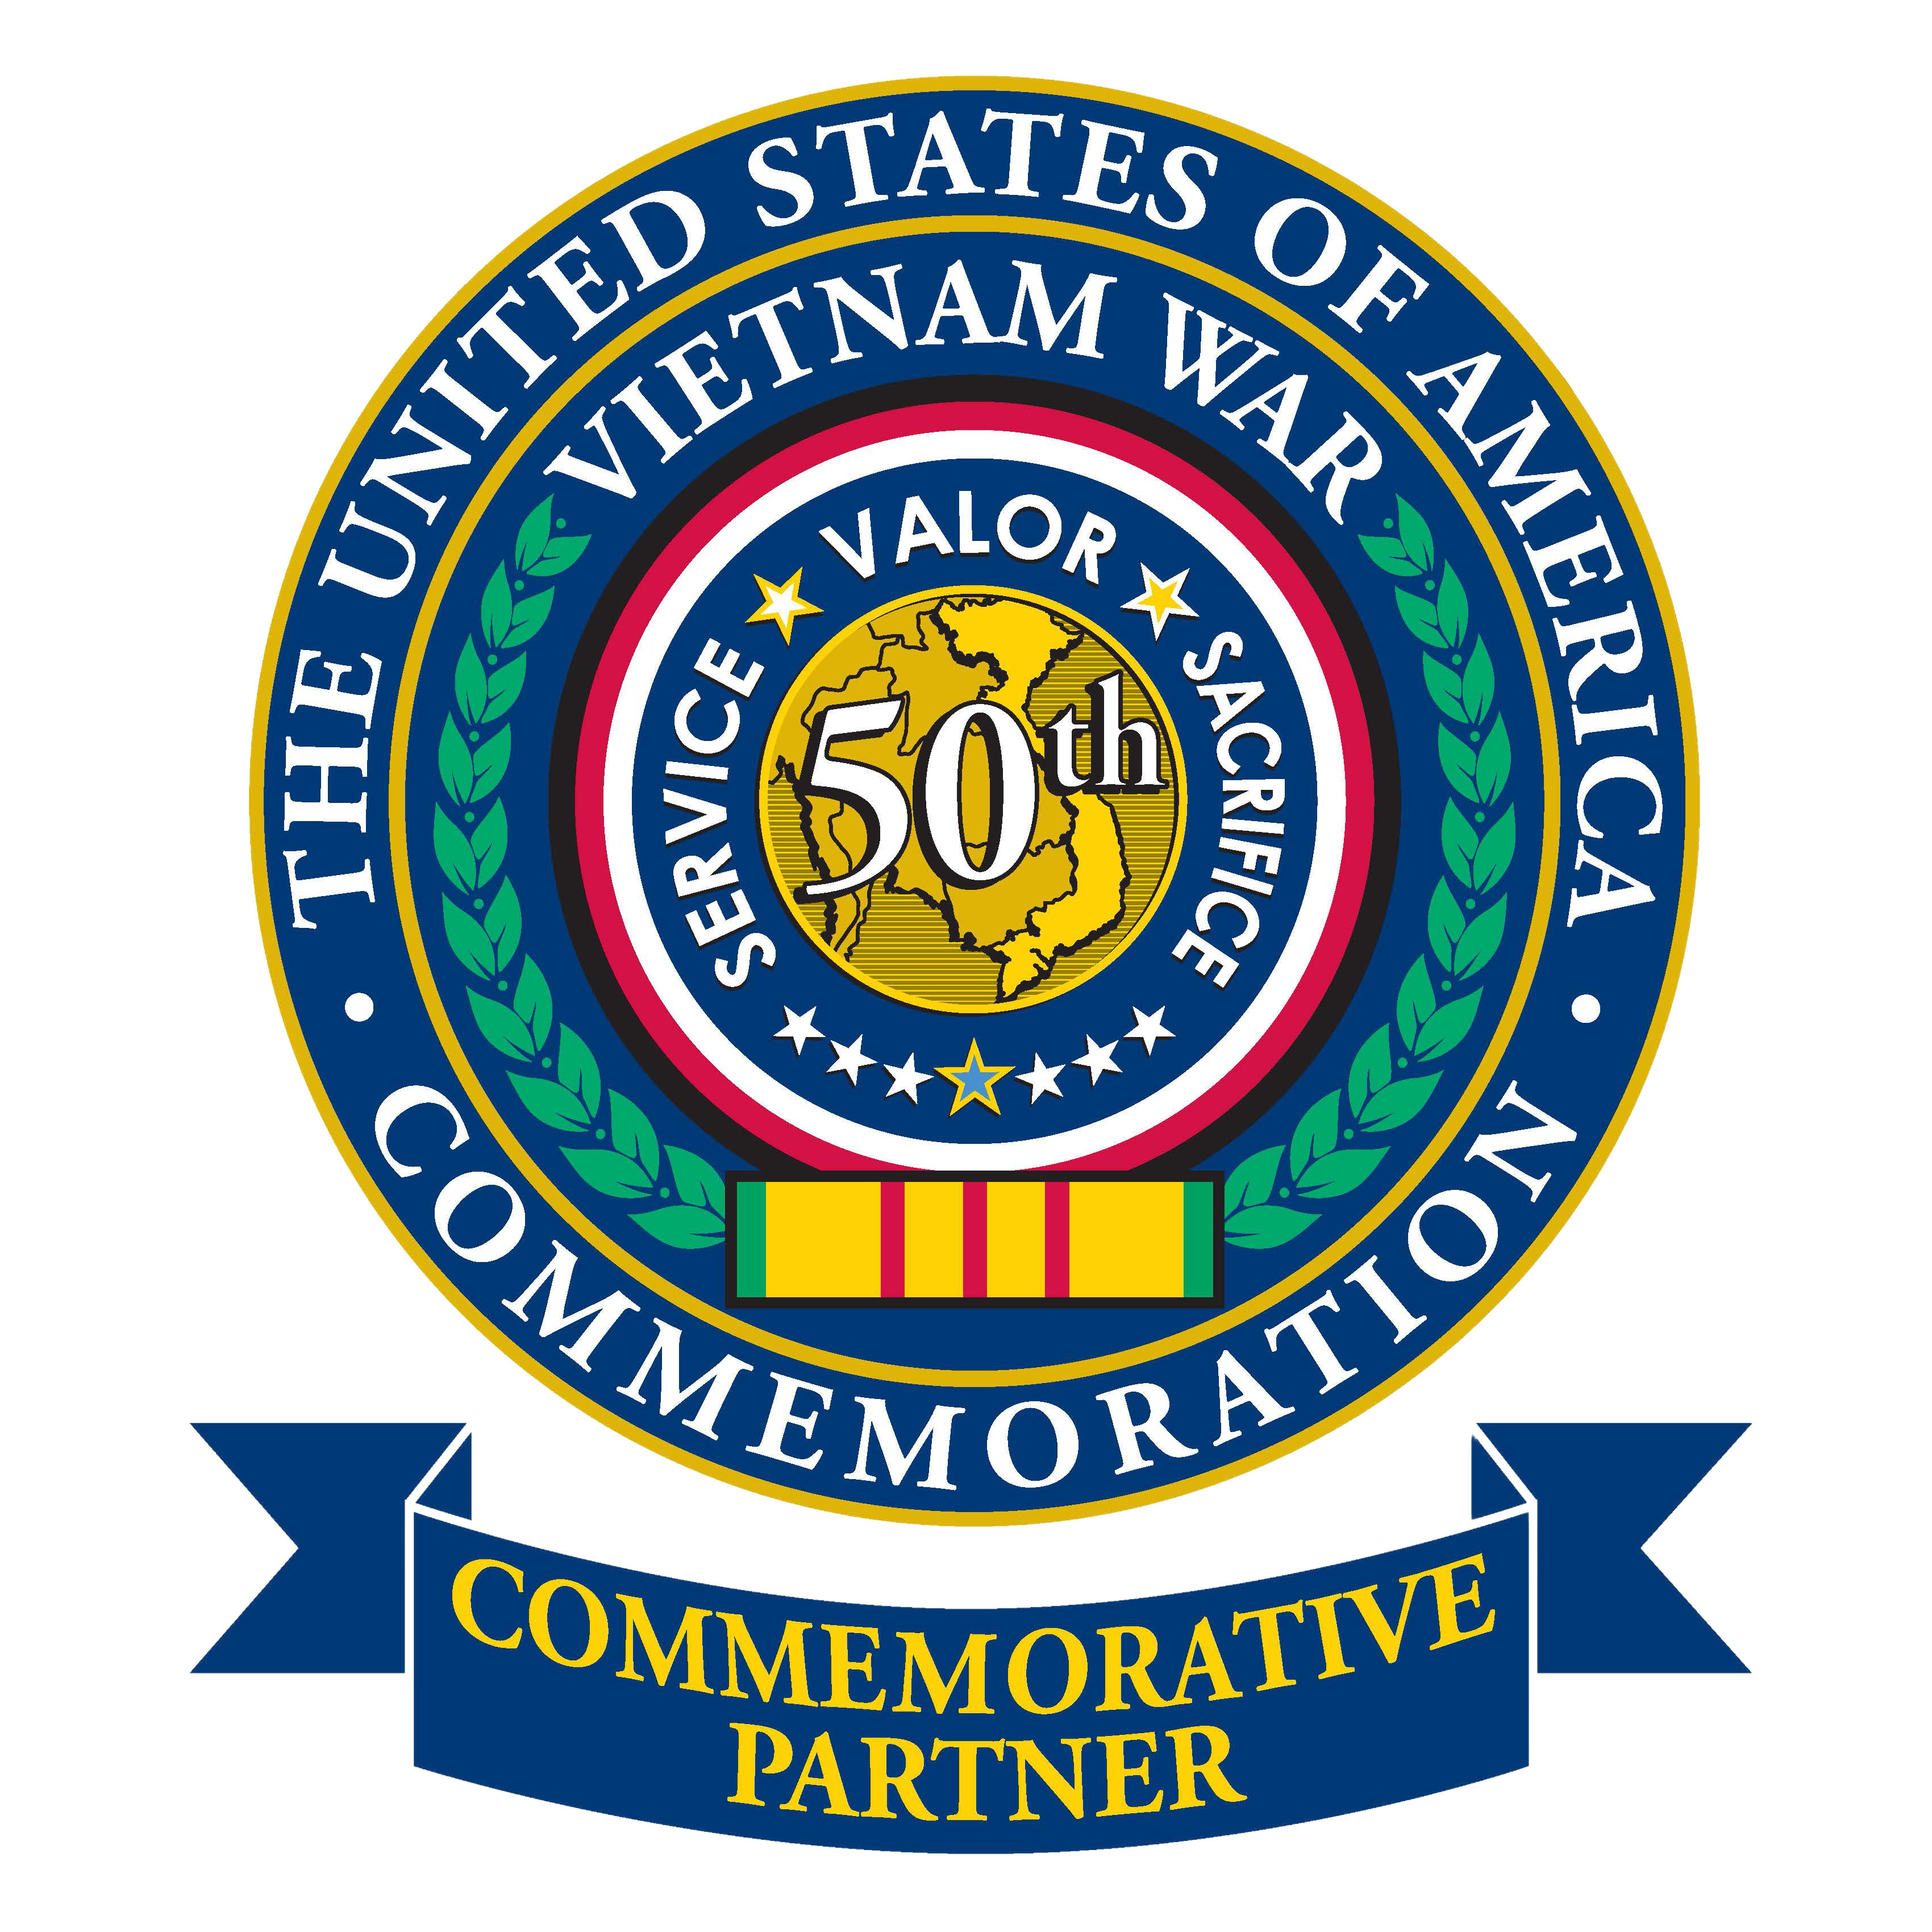 Vietnam War Commemoration logo, service, valor, and sacrifice